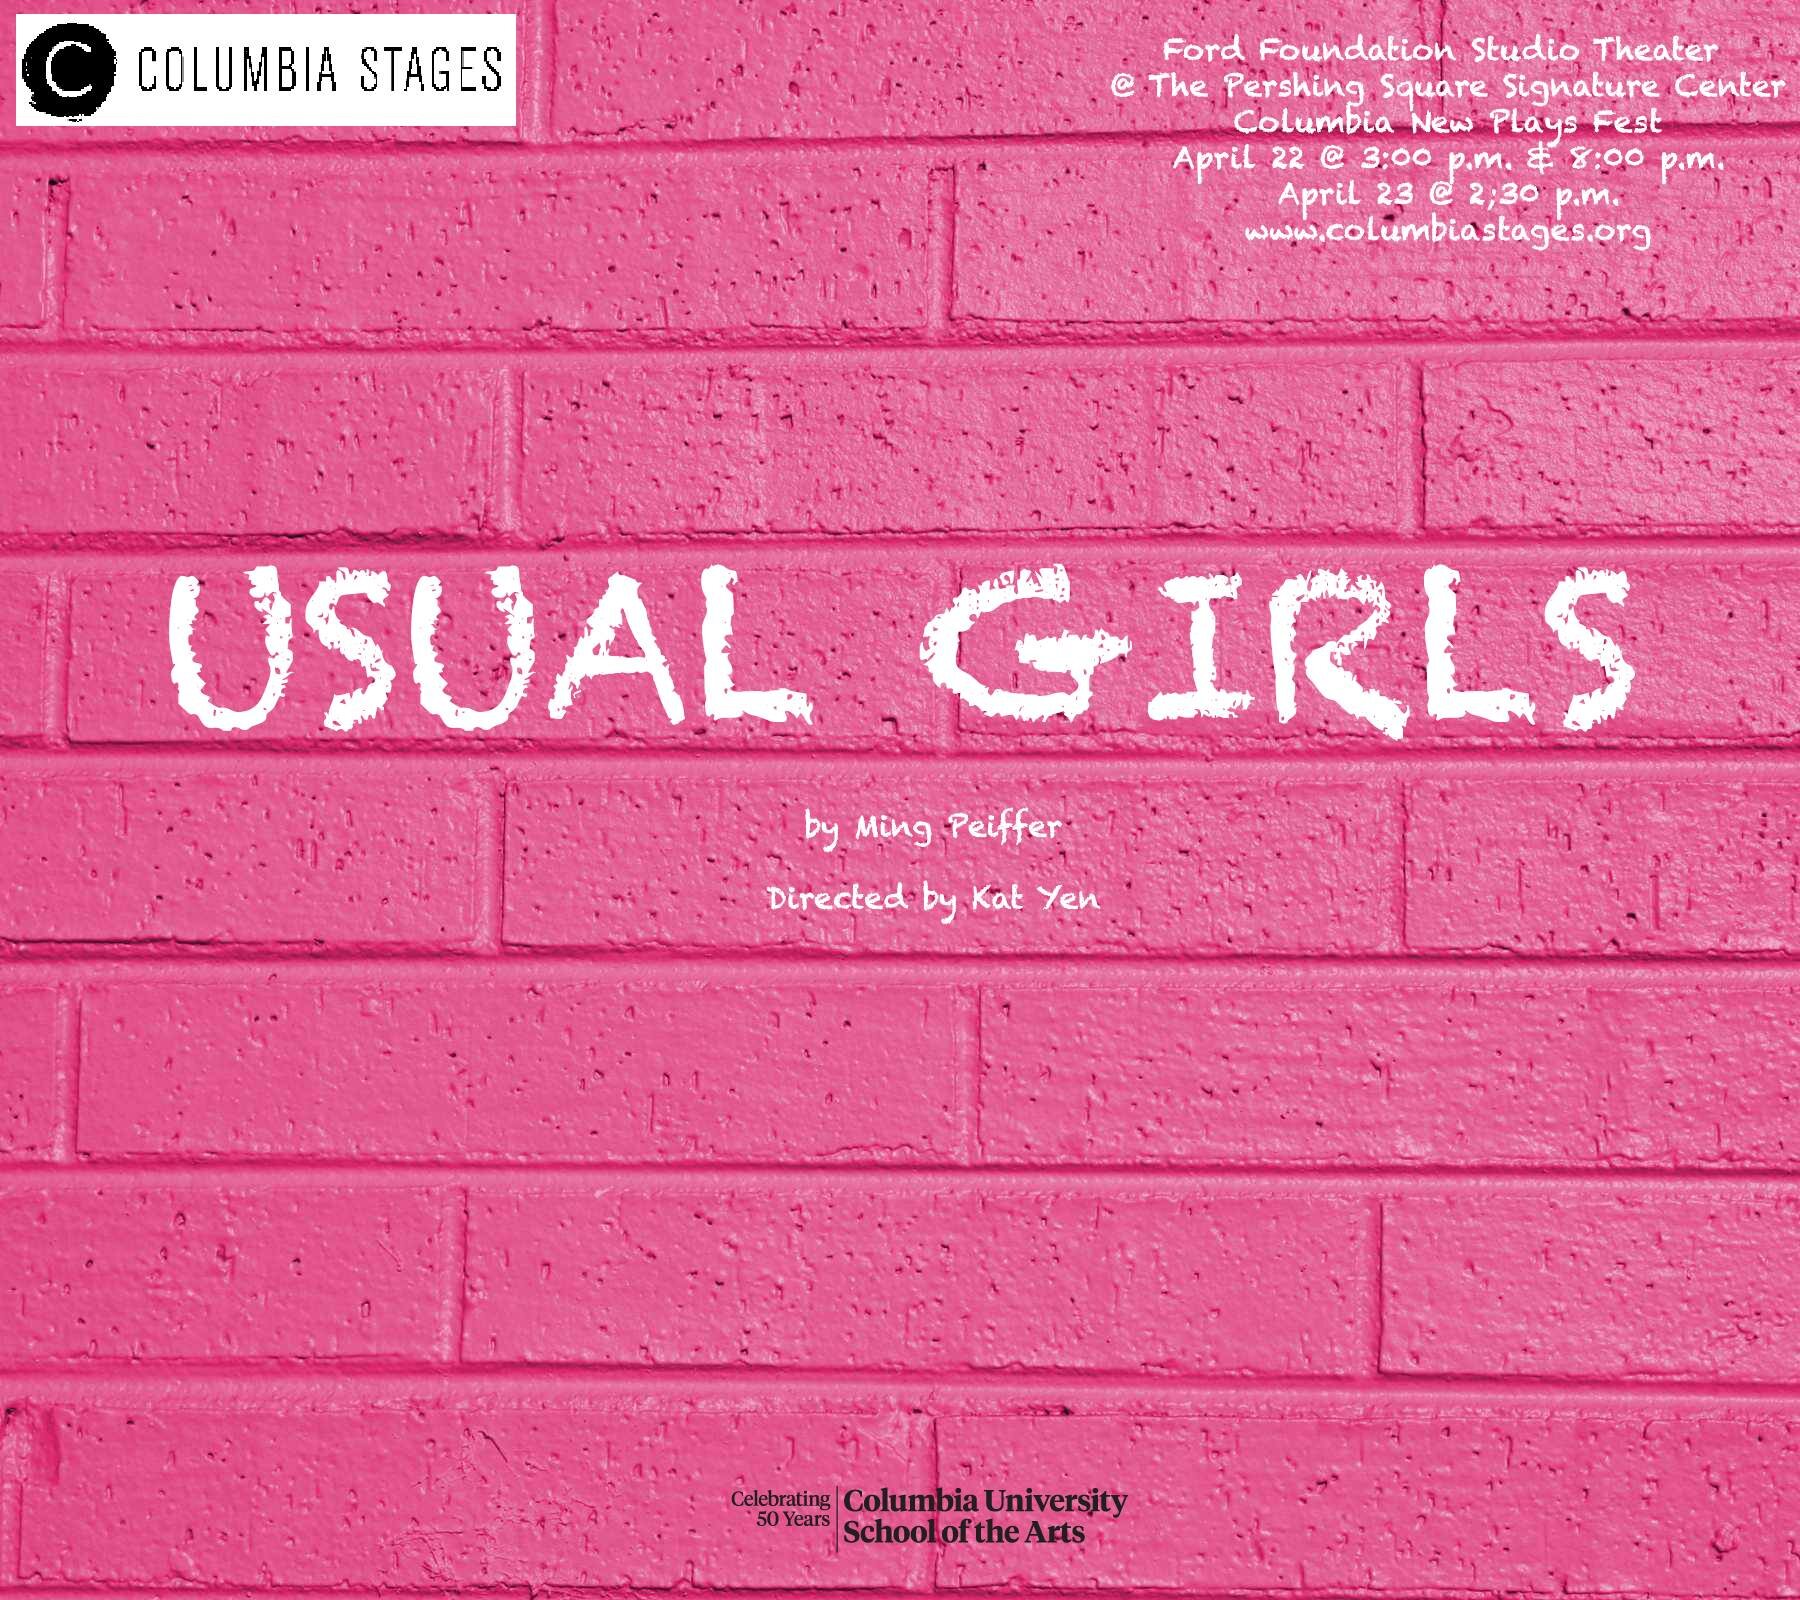 Ensemble Studio Theatre: USUAL GIRLS